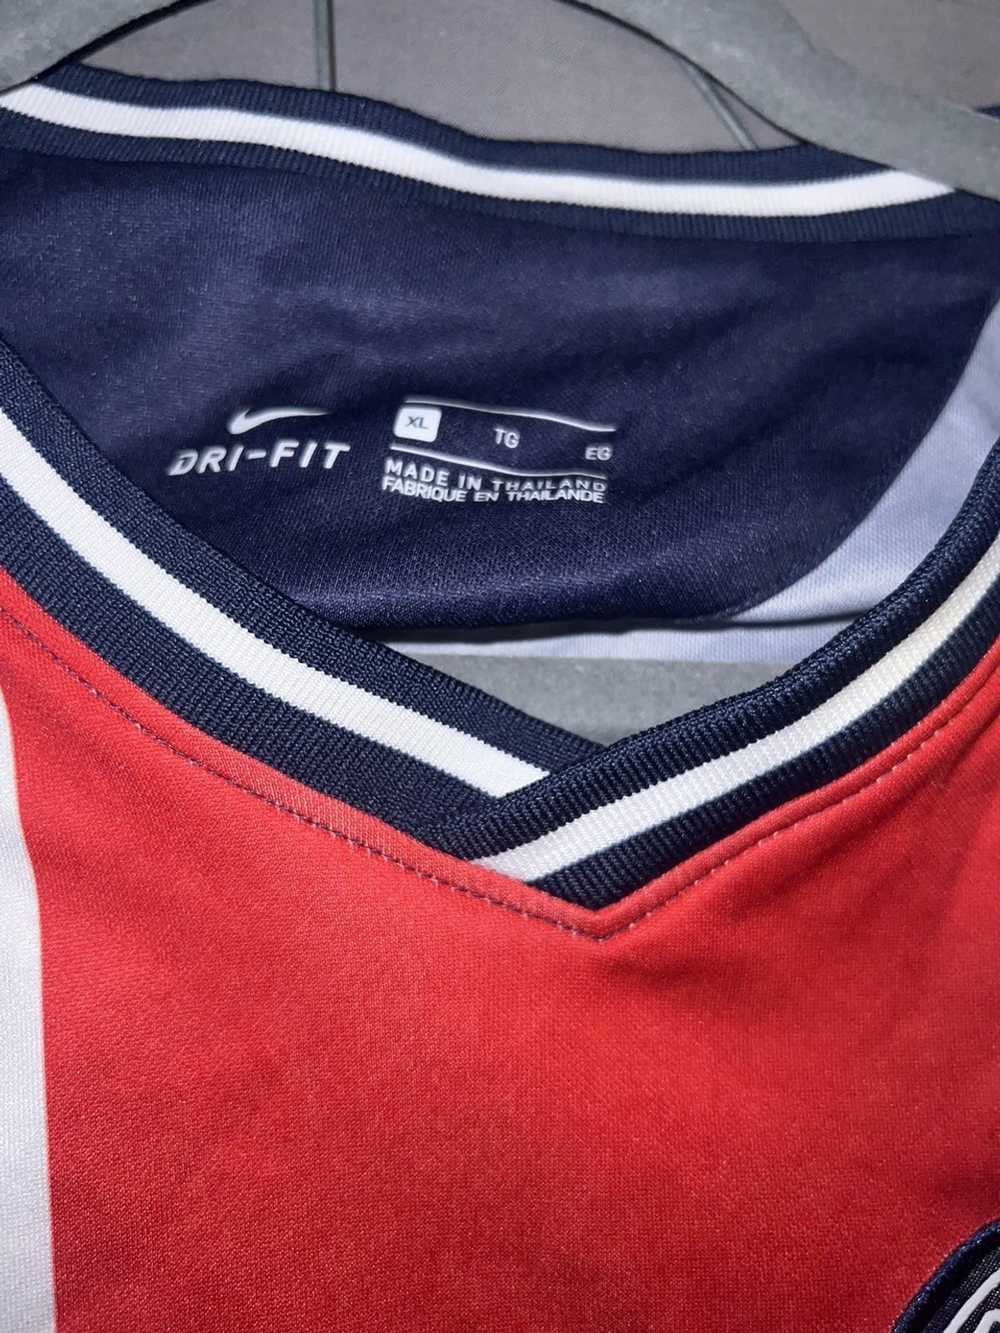 Nike 2019-20 kylian mbappe jersey - image 4